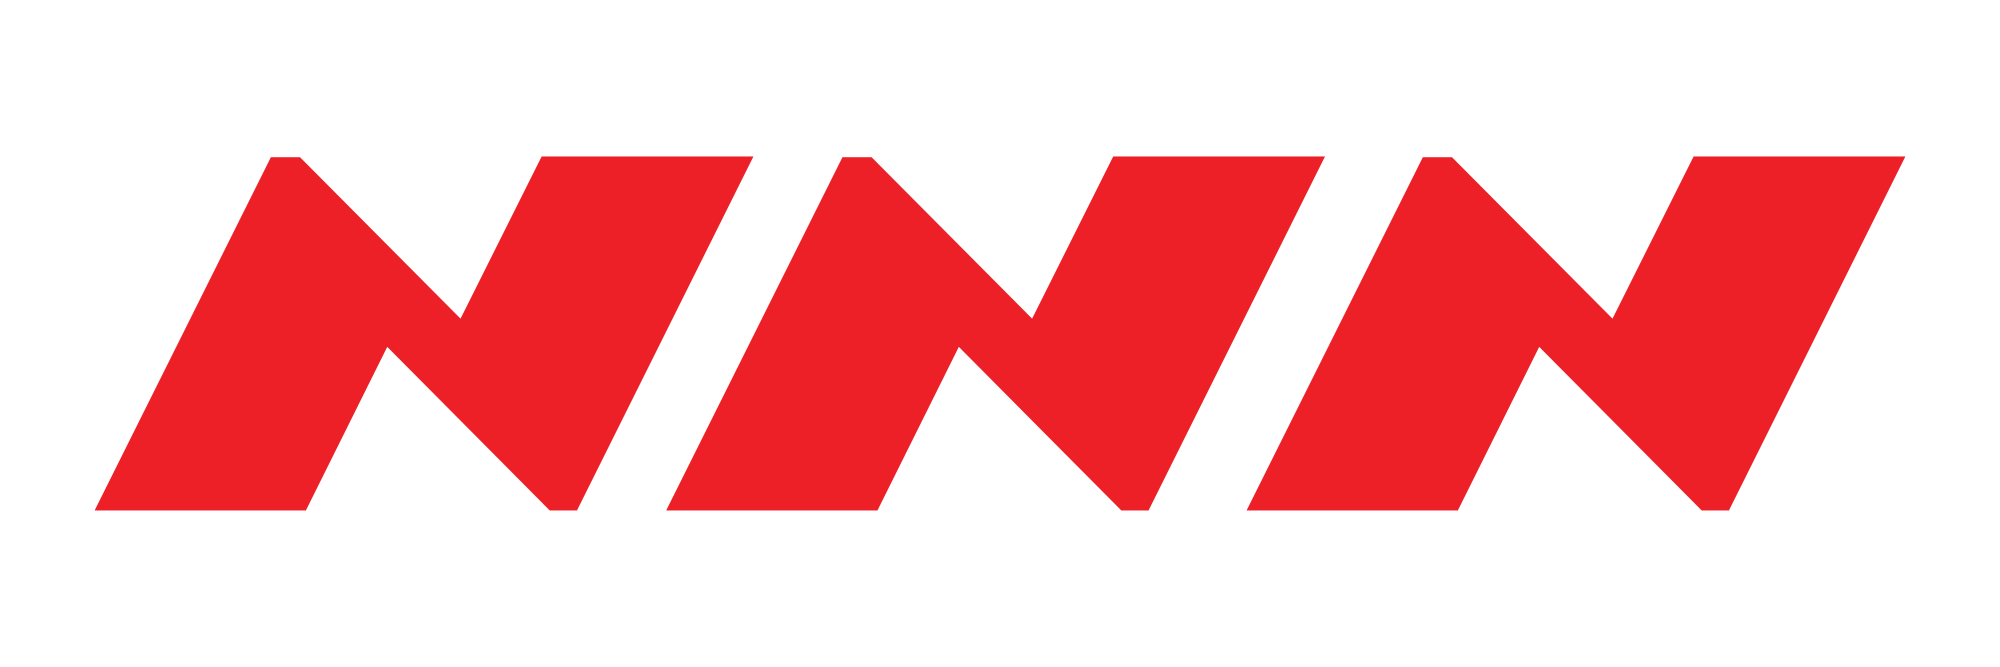 Nnn Logo - NNN logo red.svg